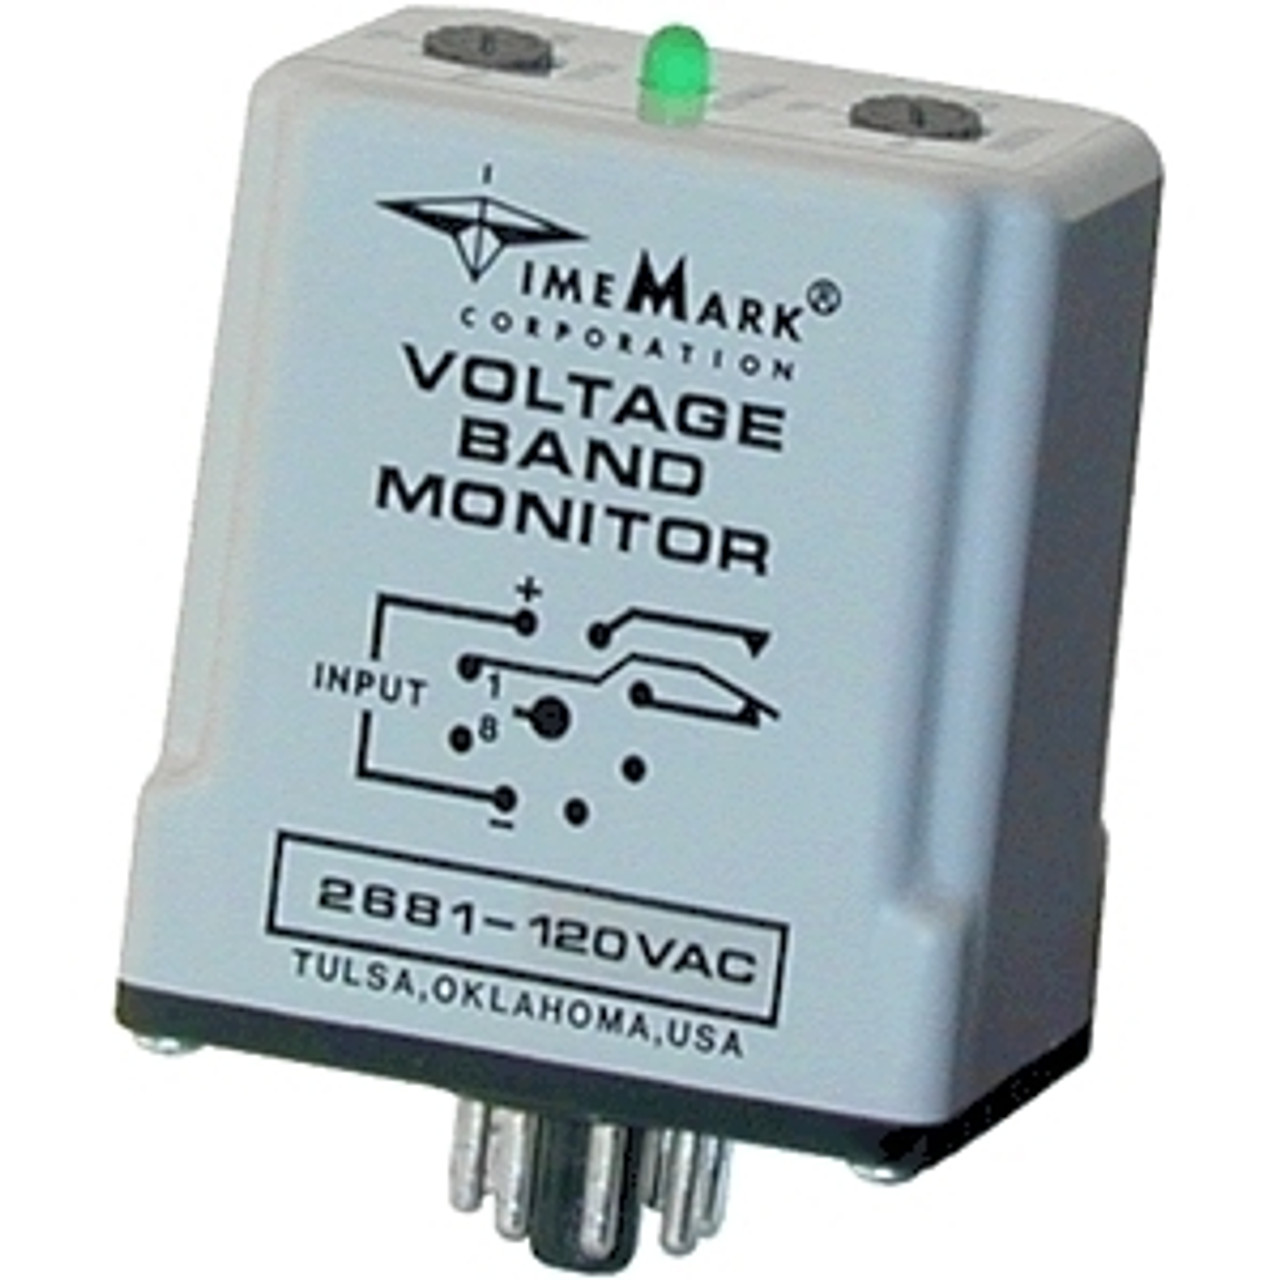 TimeMark 2681-28VDC Voltage Monitor Relays